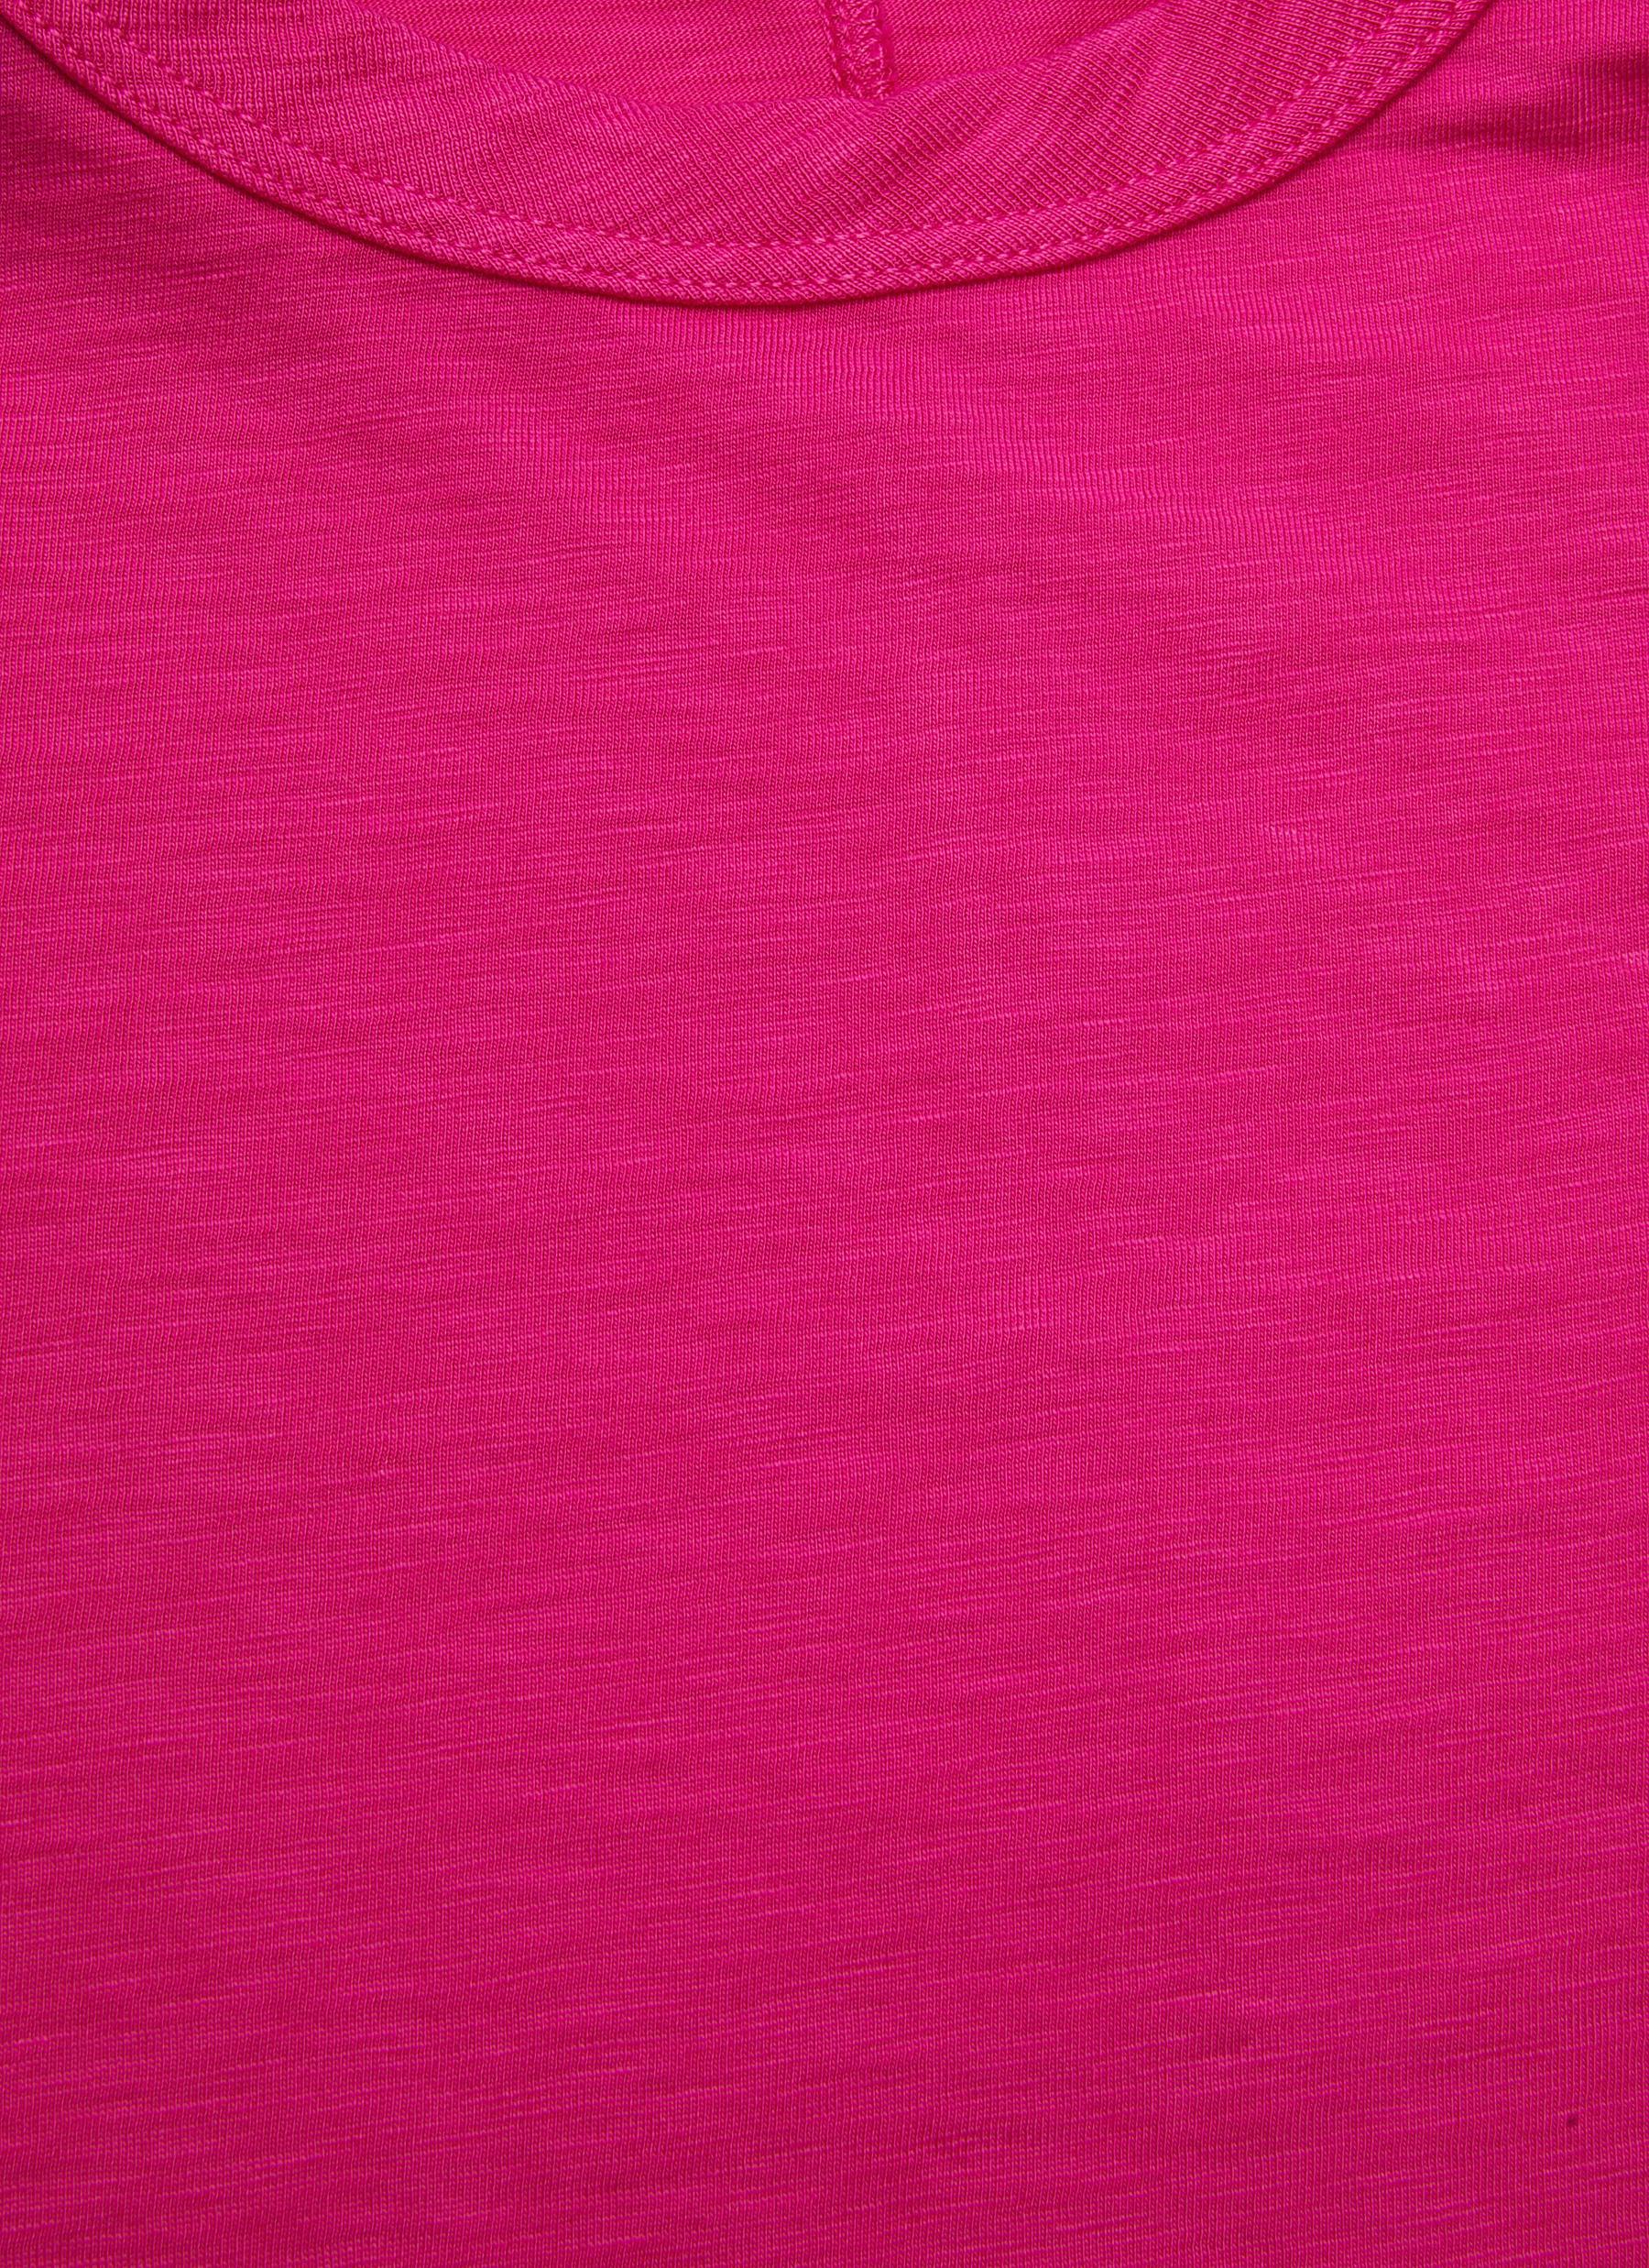 Rag & Bone Cotton 'the Slub' T-shirt in Pink for Men - Lyst